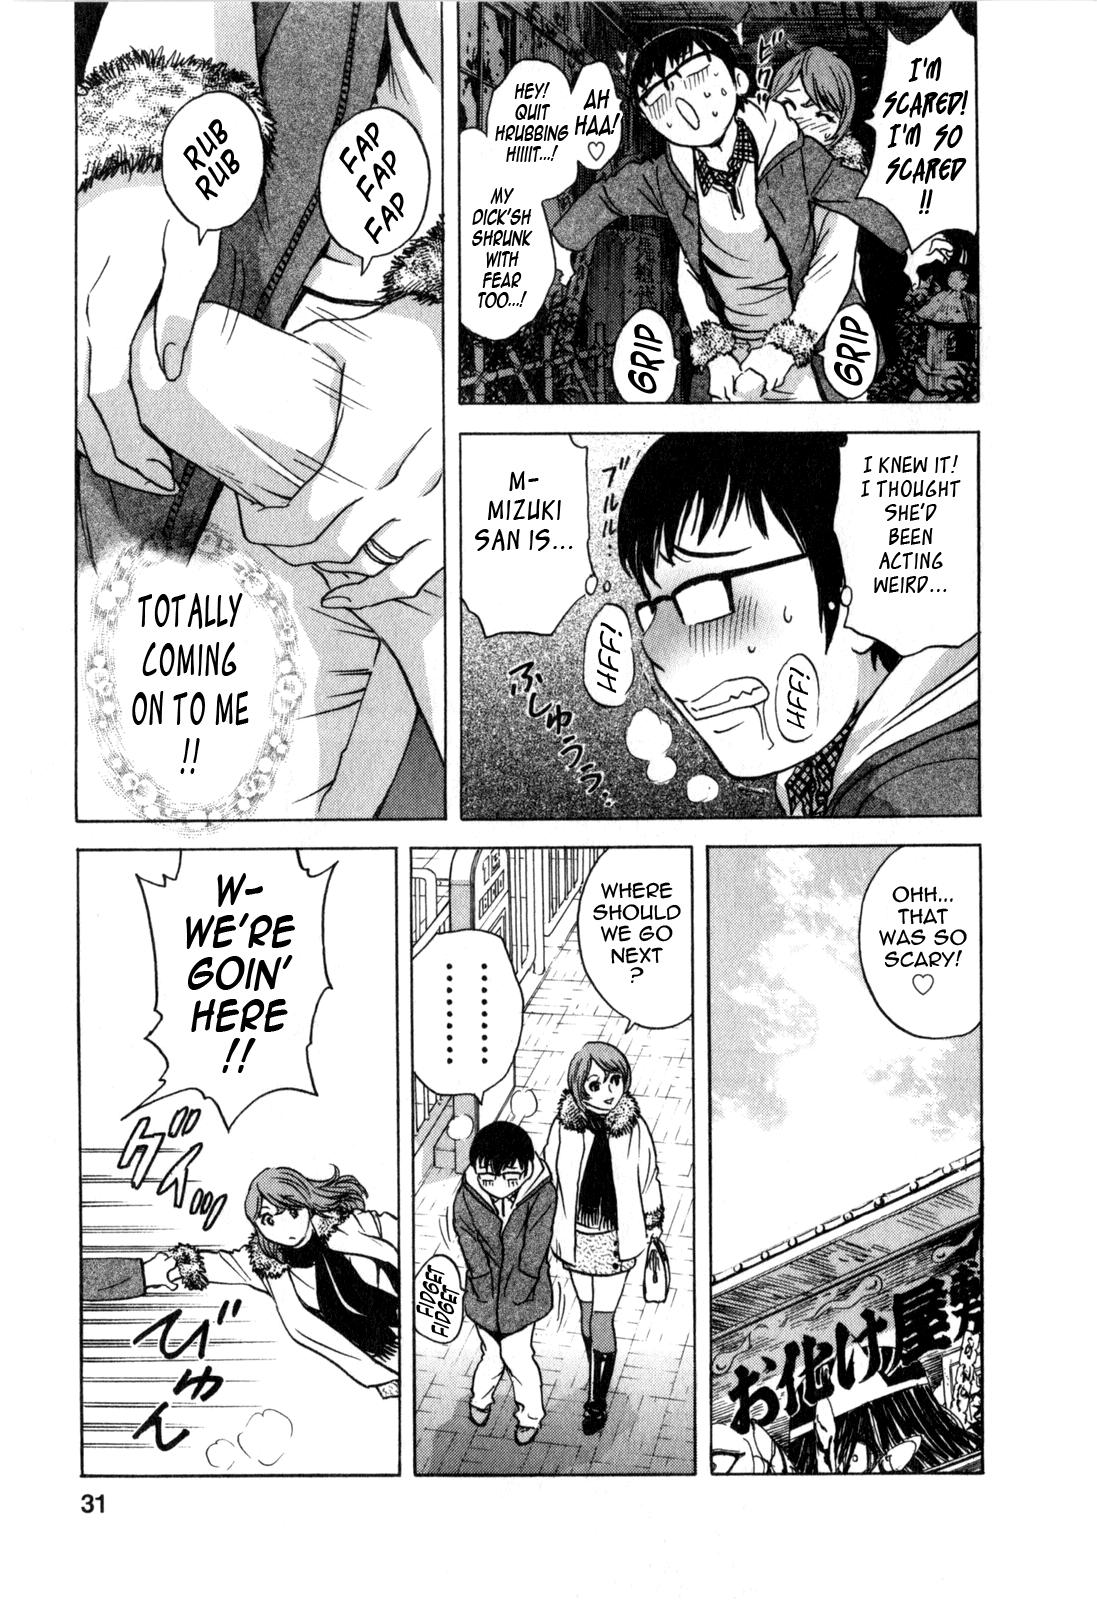 [Hidemaru] Life with Married Women Just Like a Manga 3 - Ch. 1-2 [English] {Tadanohito} 33